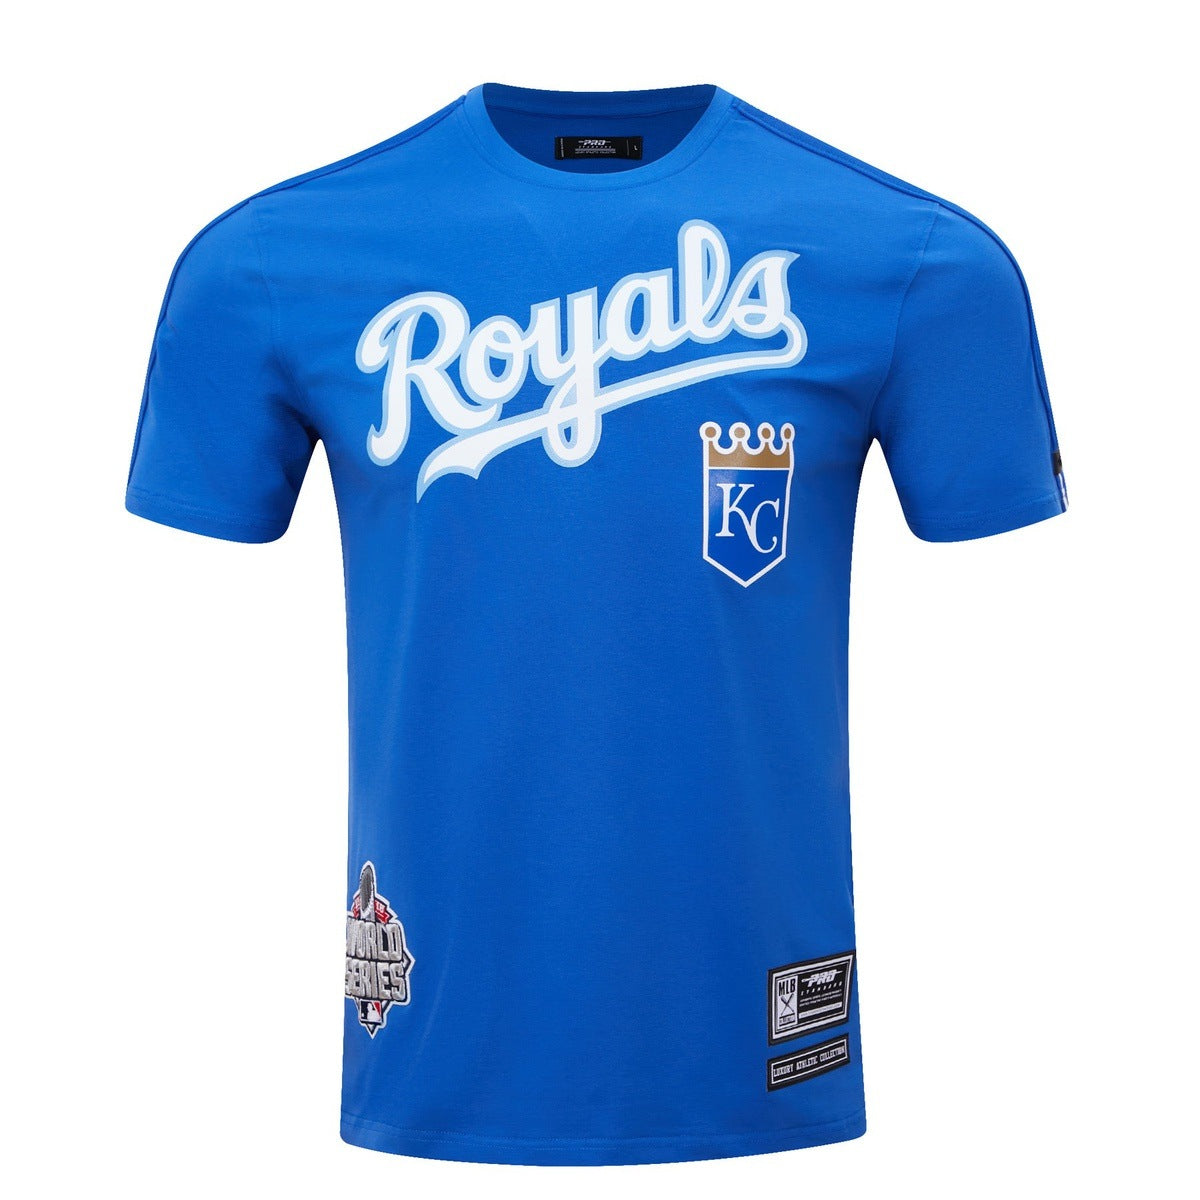 kansas city royals jersey light blue